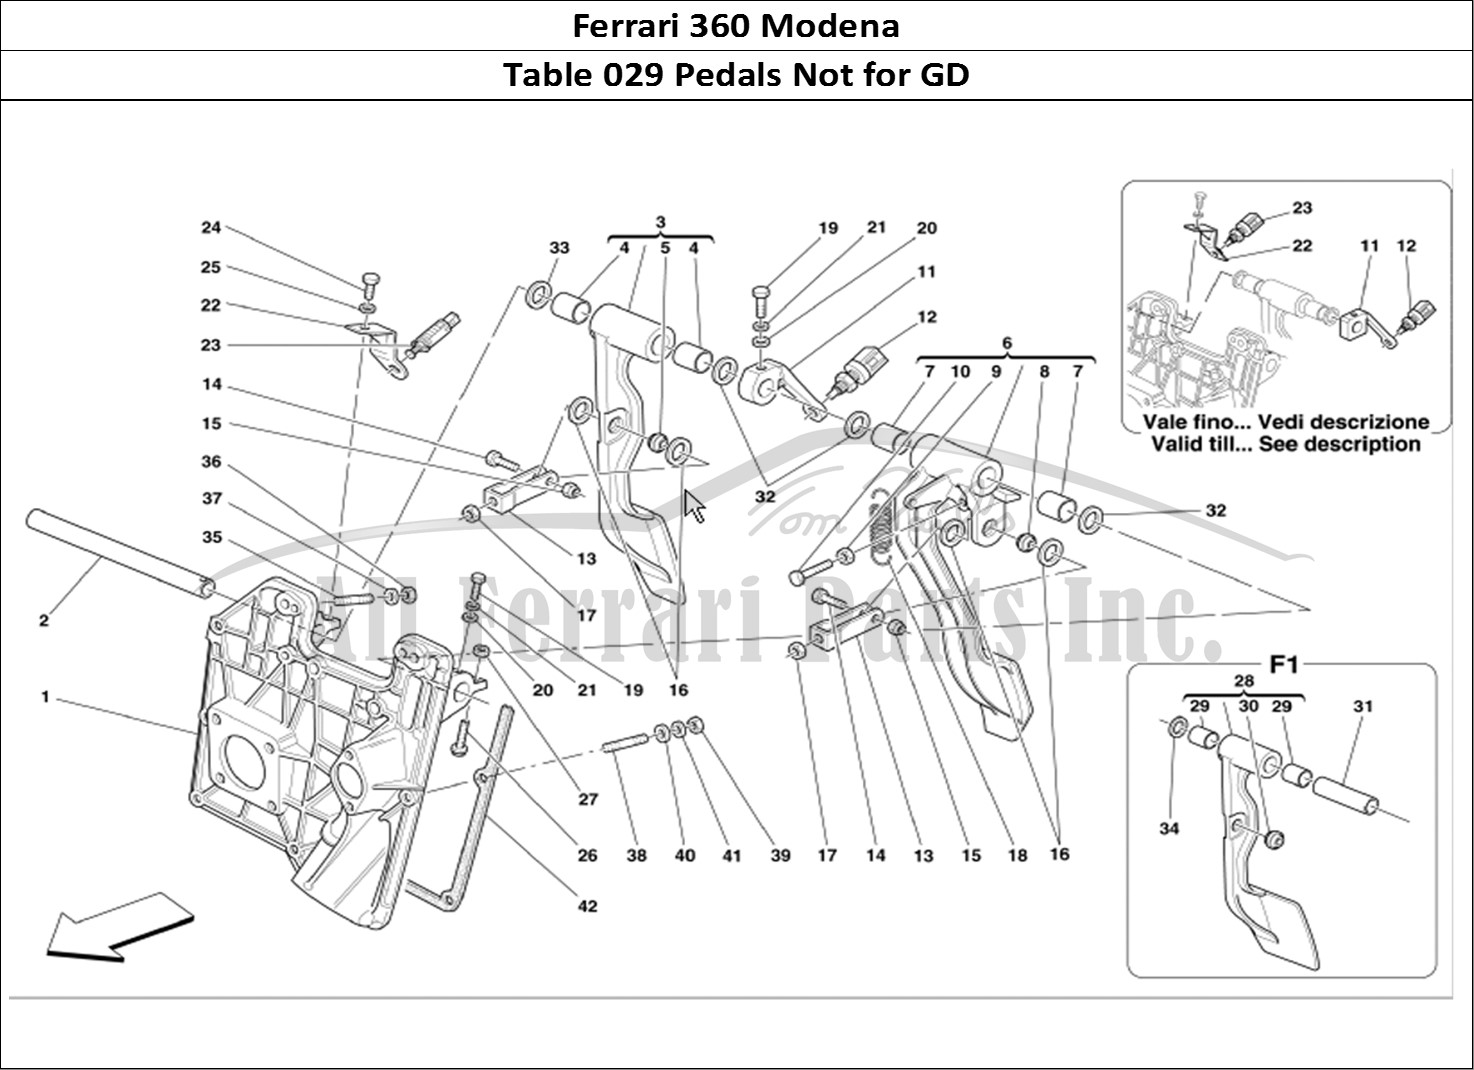 Ferrari Parts Ferrari 360 Modena Page 029 Pedals -Not for GD-